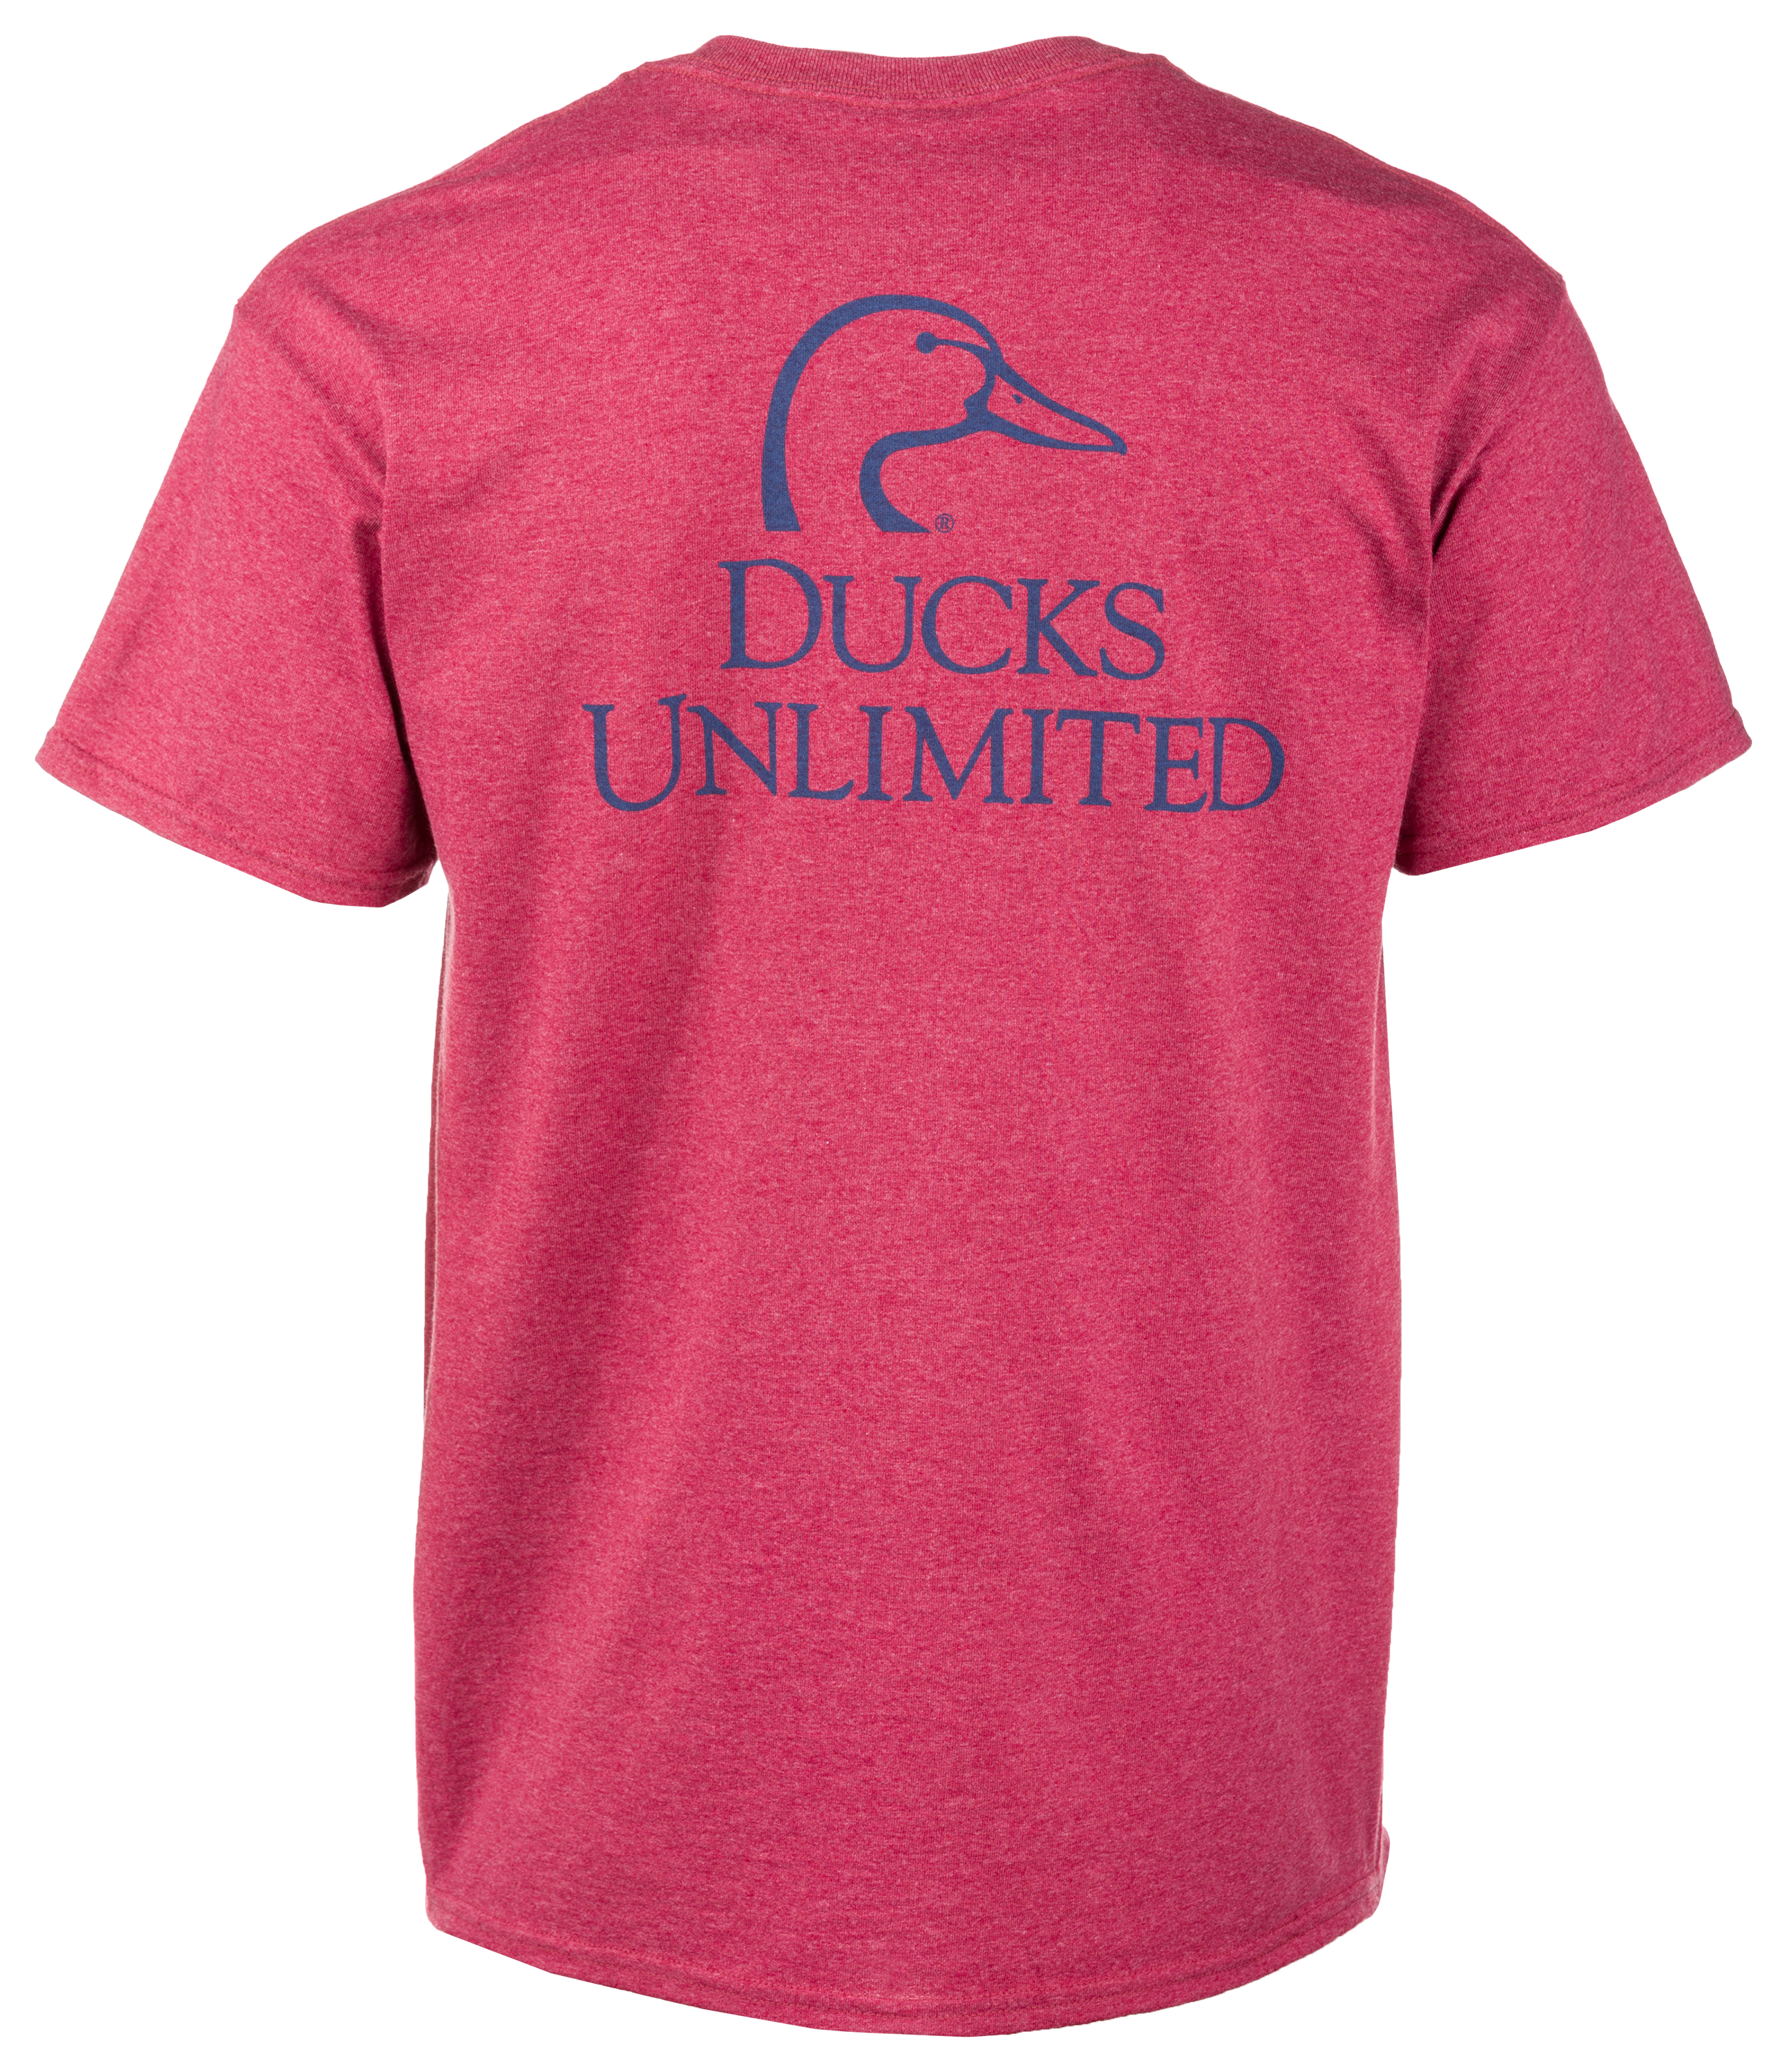 Ducks Unlimited Logo Short-Sleeve T-Shirt for Men - Cardinal Heather - S